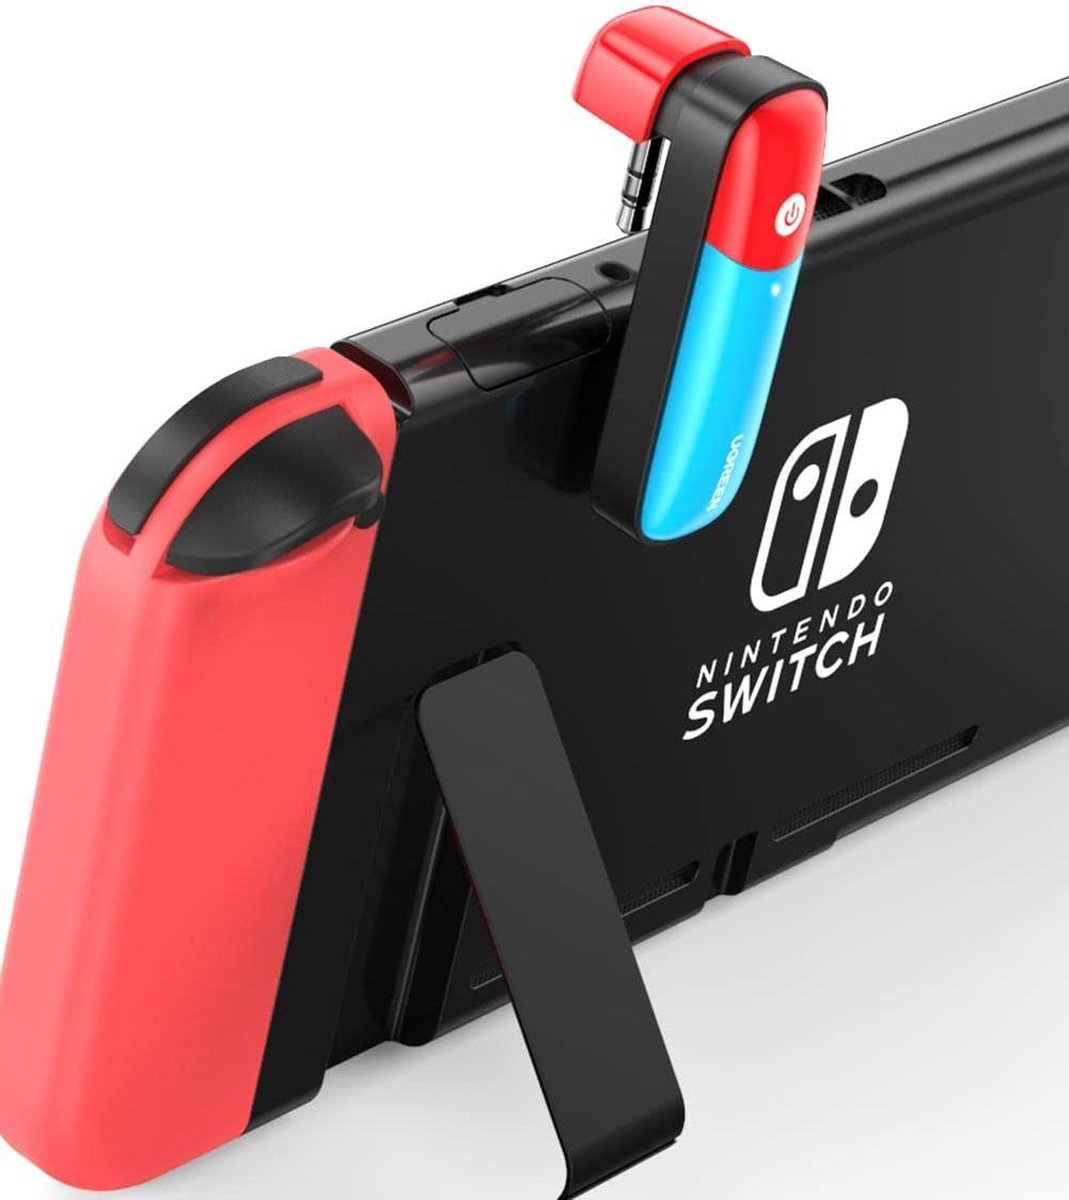 Dongle audio Bluetooth pour Nintendo Switch - Silvergear